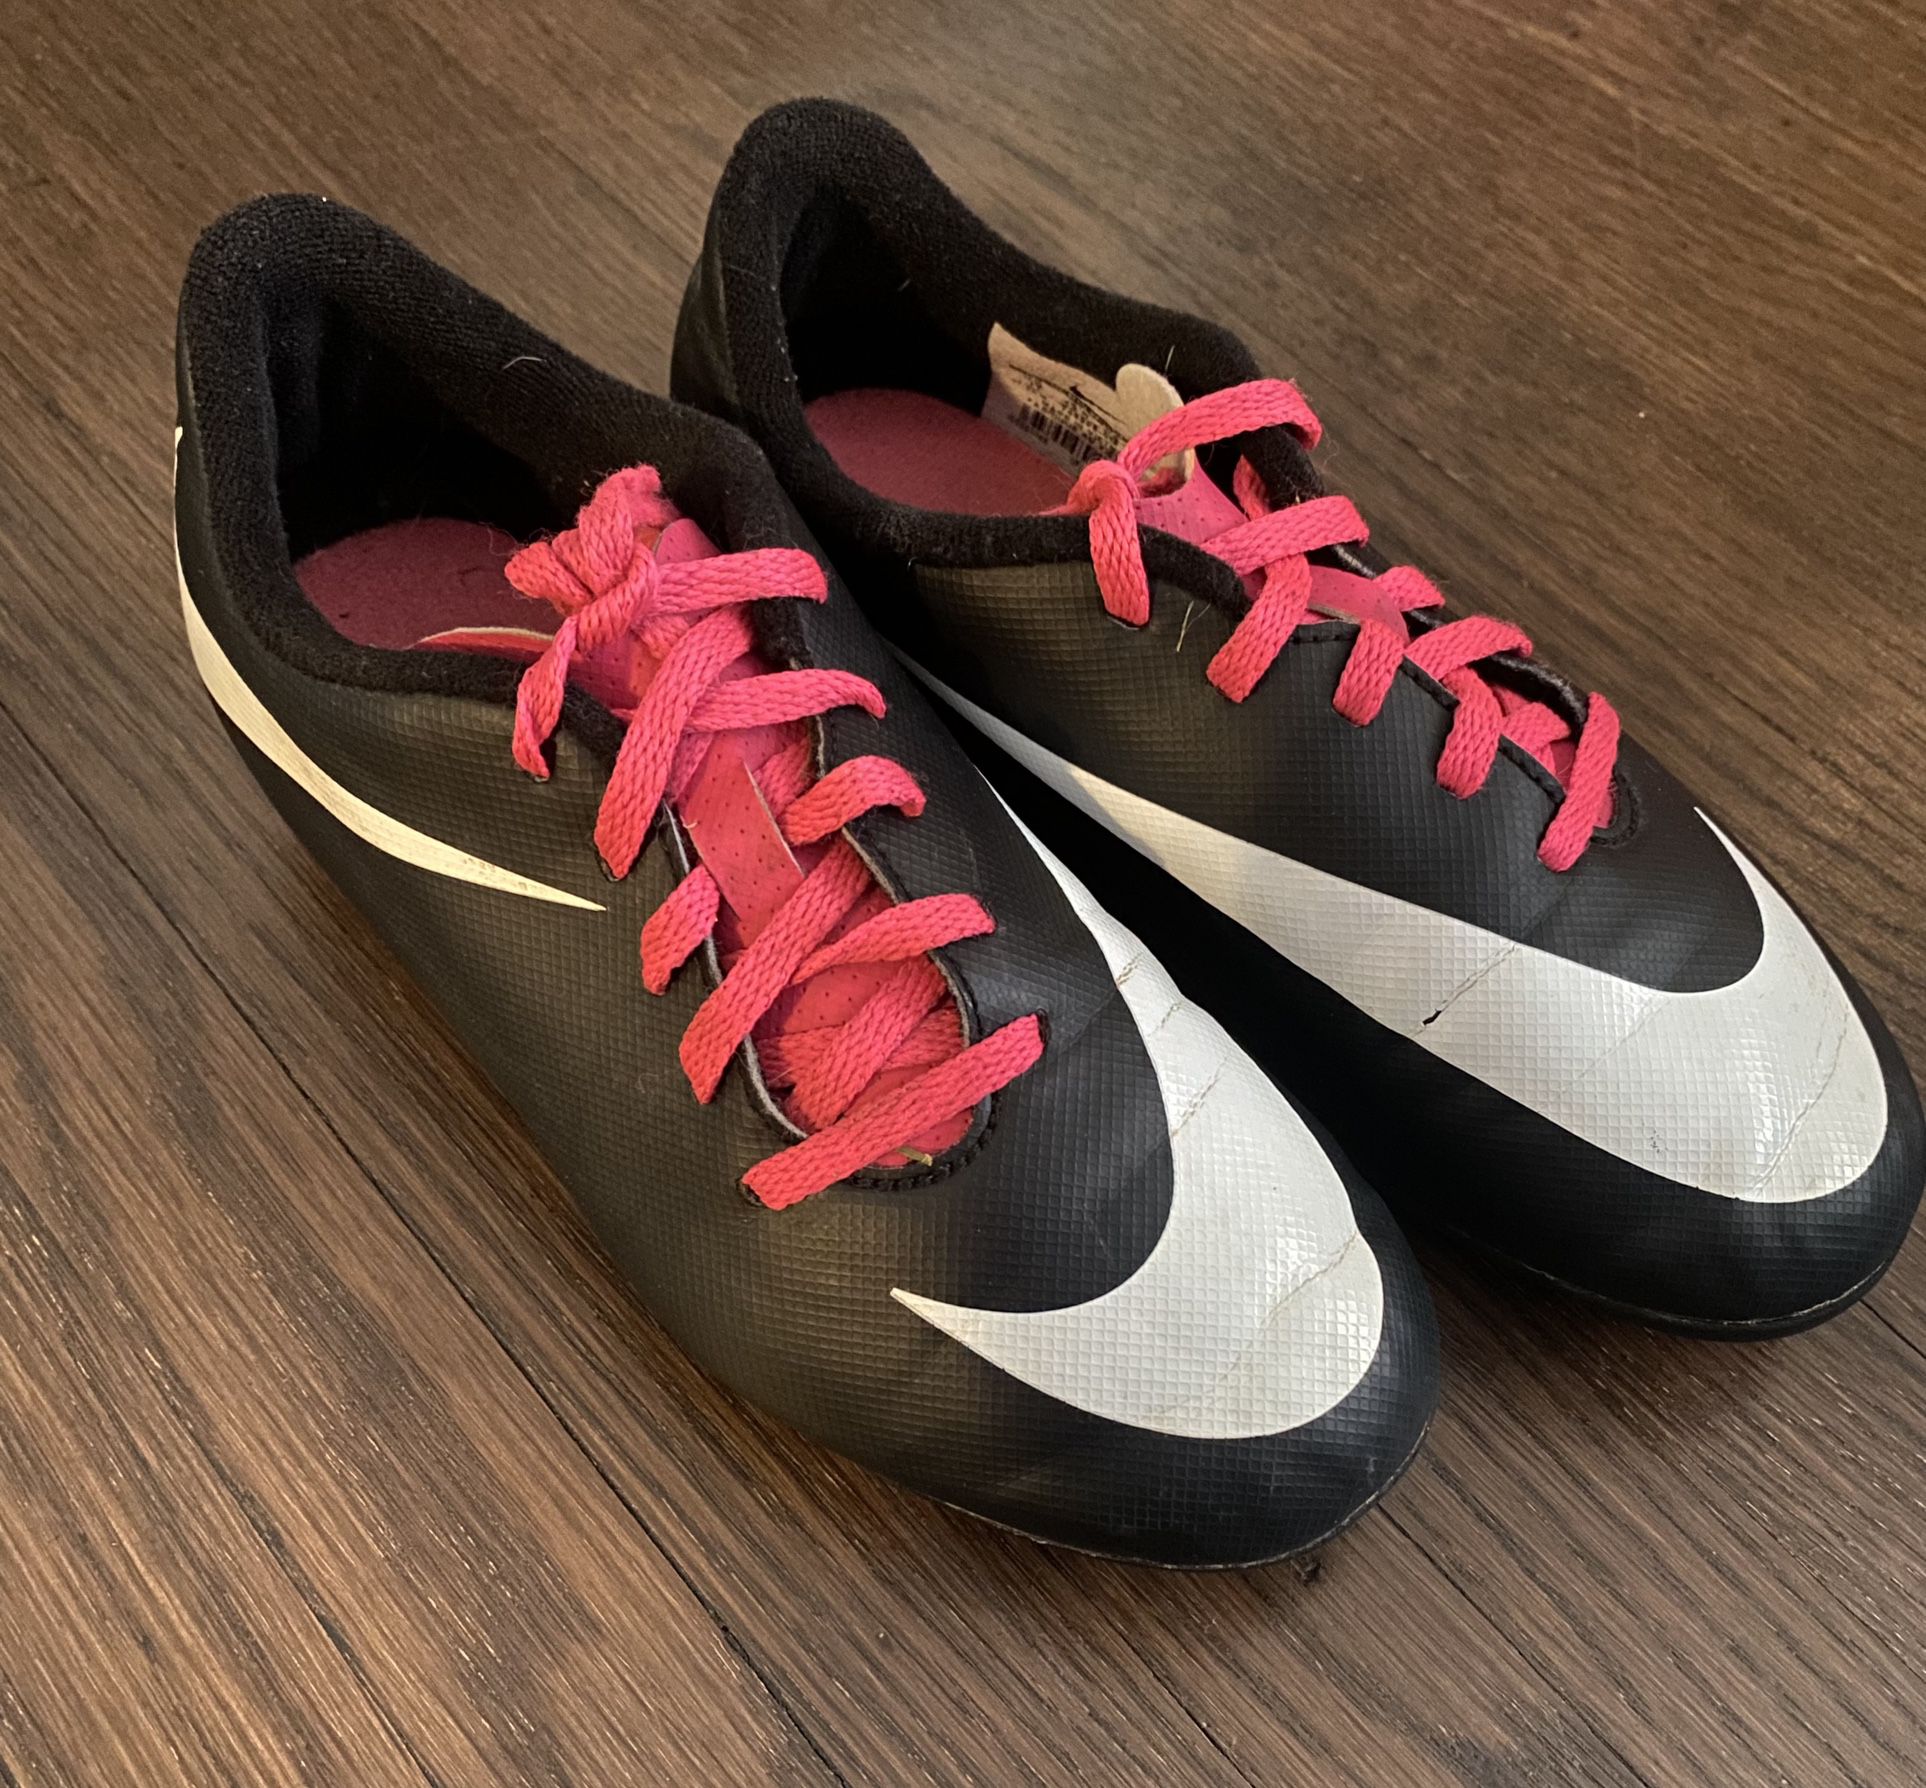 Nike Jr Bravata FG Kids Black/Pink Soccer Cleats Size 1Y 